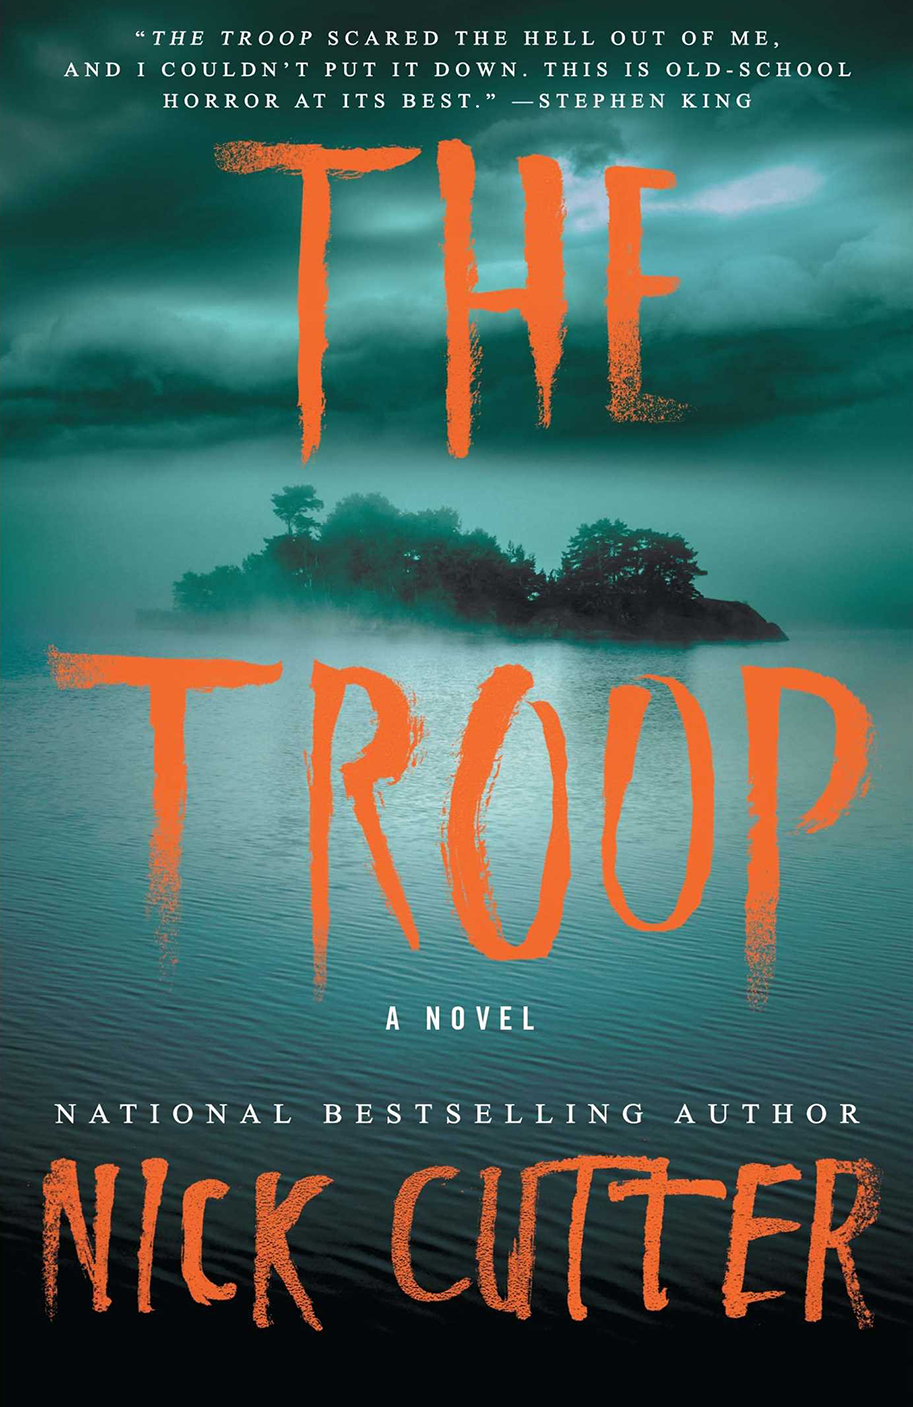 James Wan, The Troop, Nick Cutter